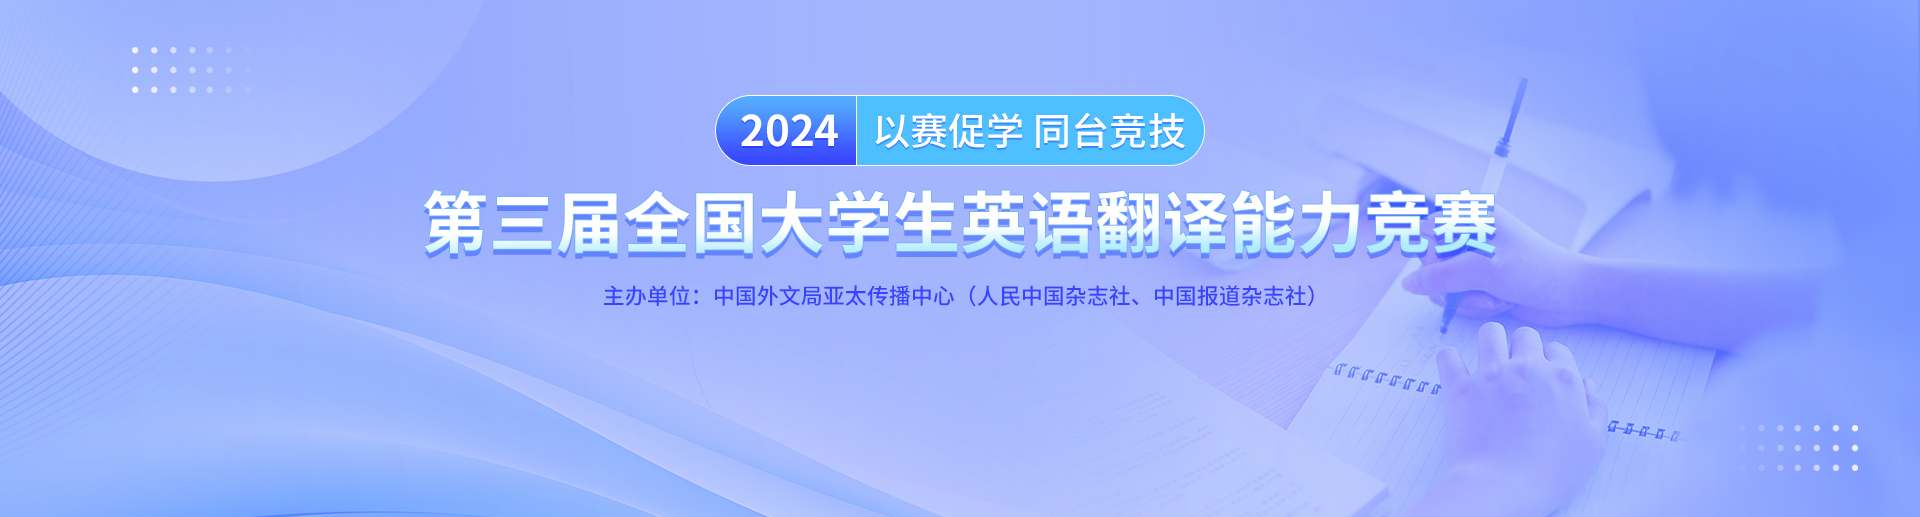 2024翻译能力banner.jpg